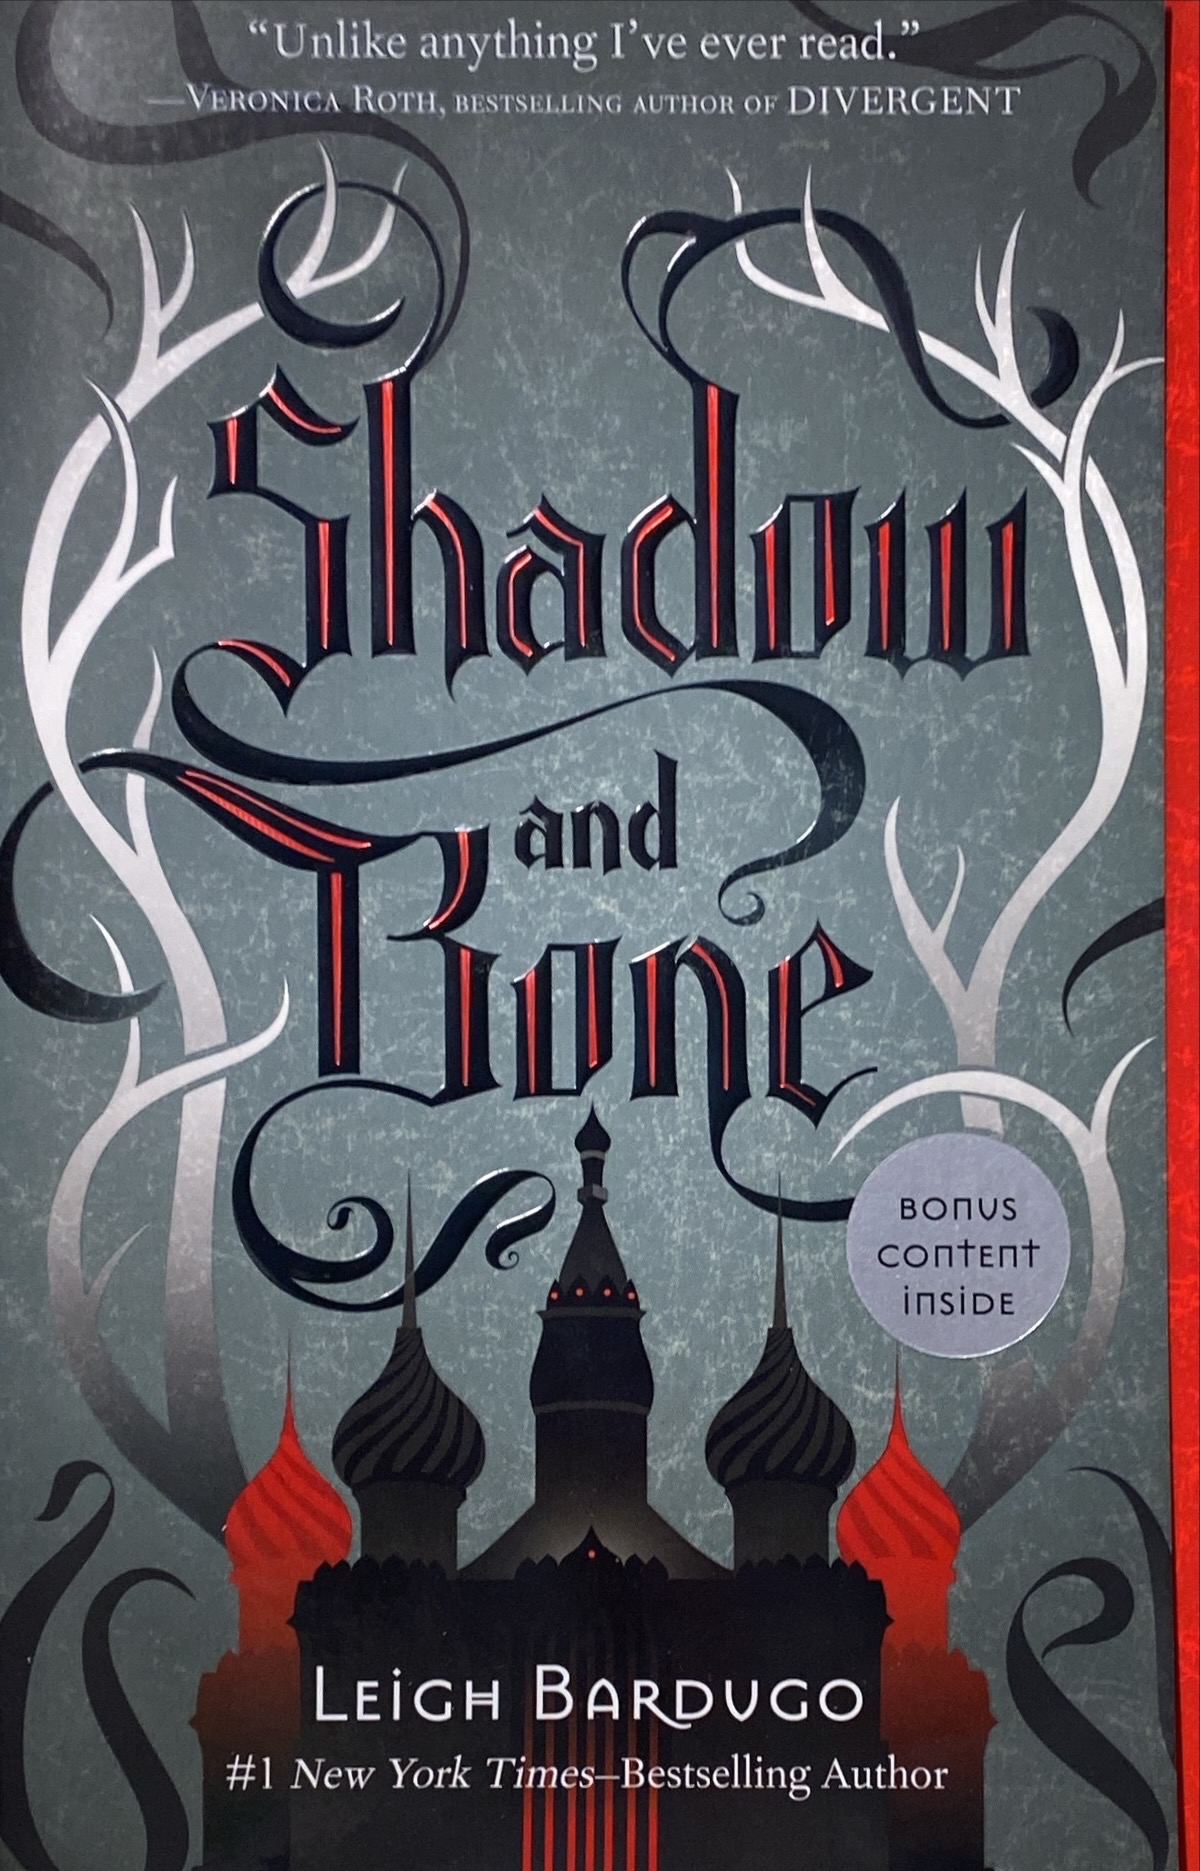 Shadow and Bone Book 1